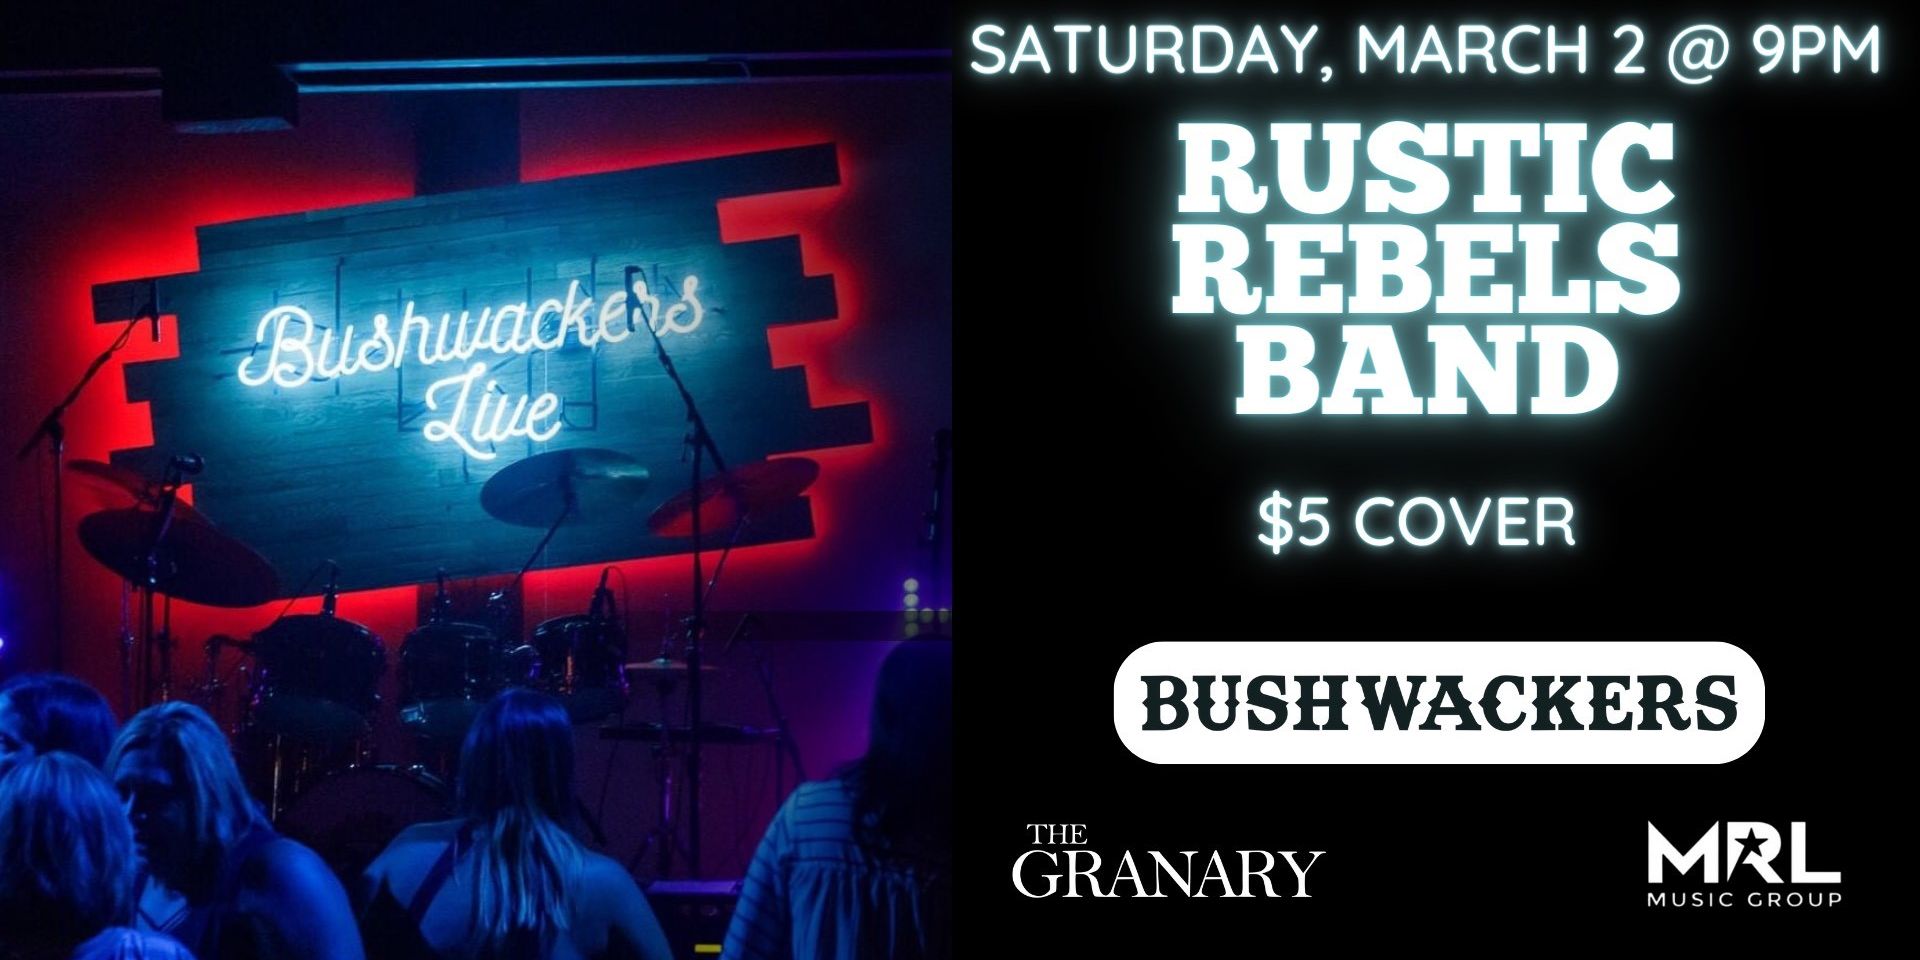 Rustic Rebels Band Live @ Bushwackers! promotional image